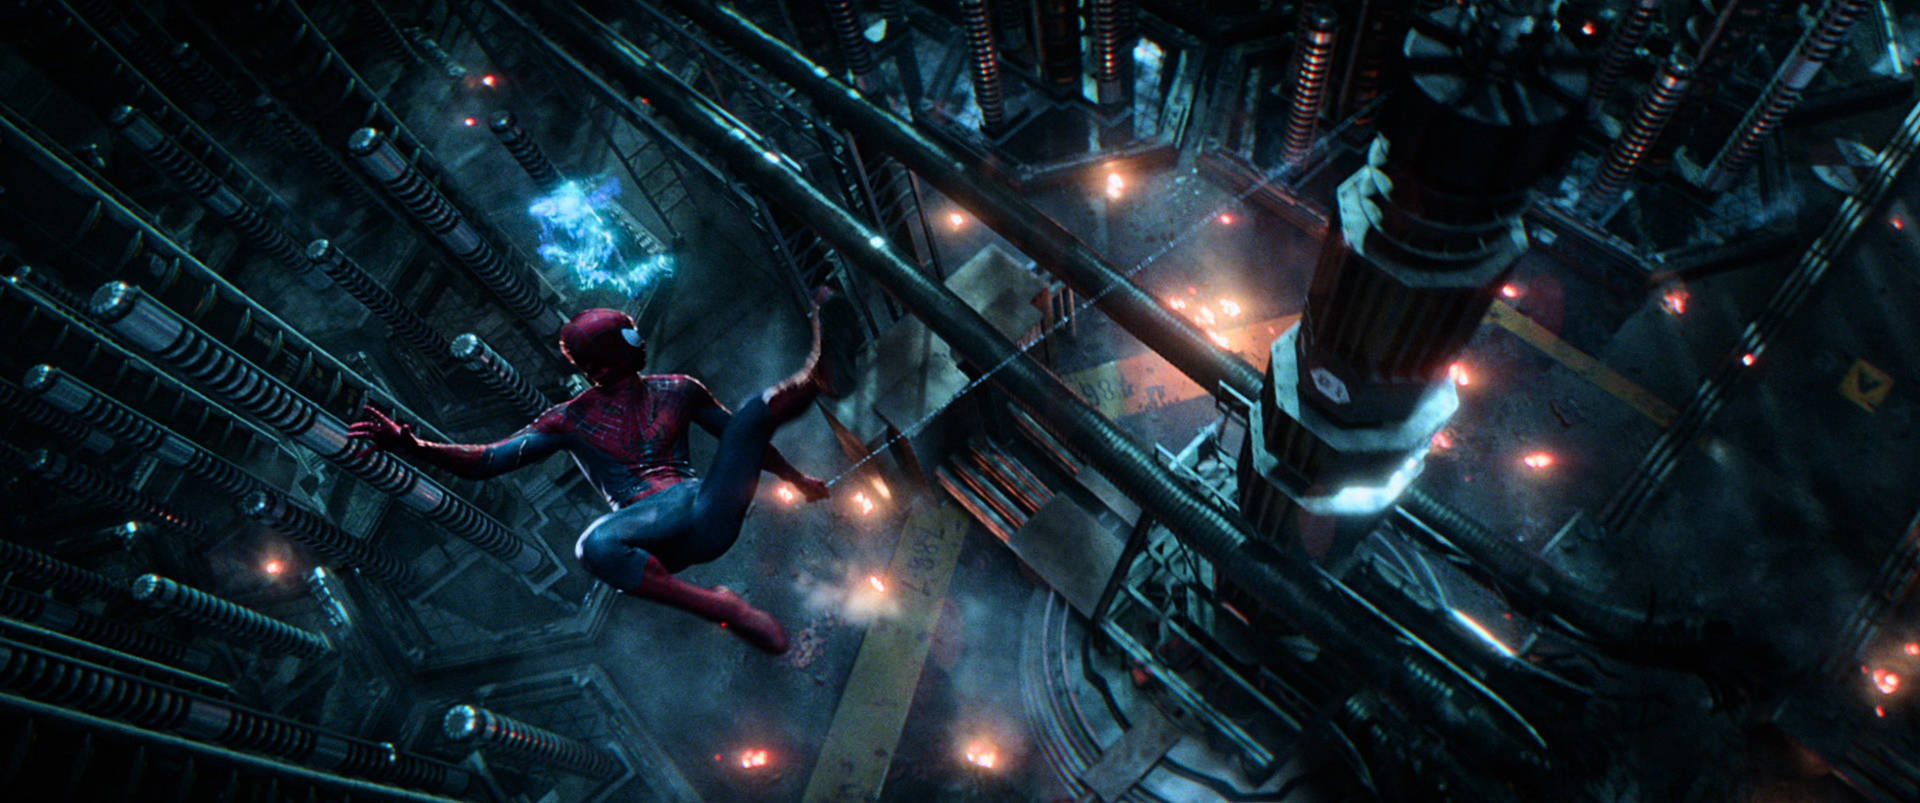 Spider-Man in Action! Wallpaper